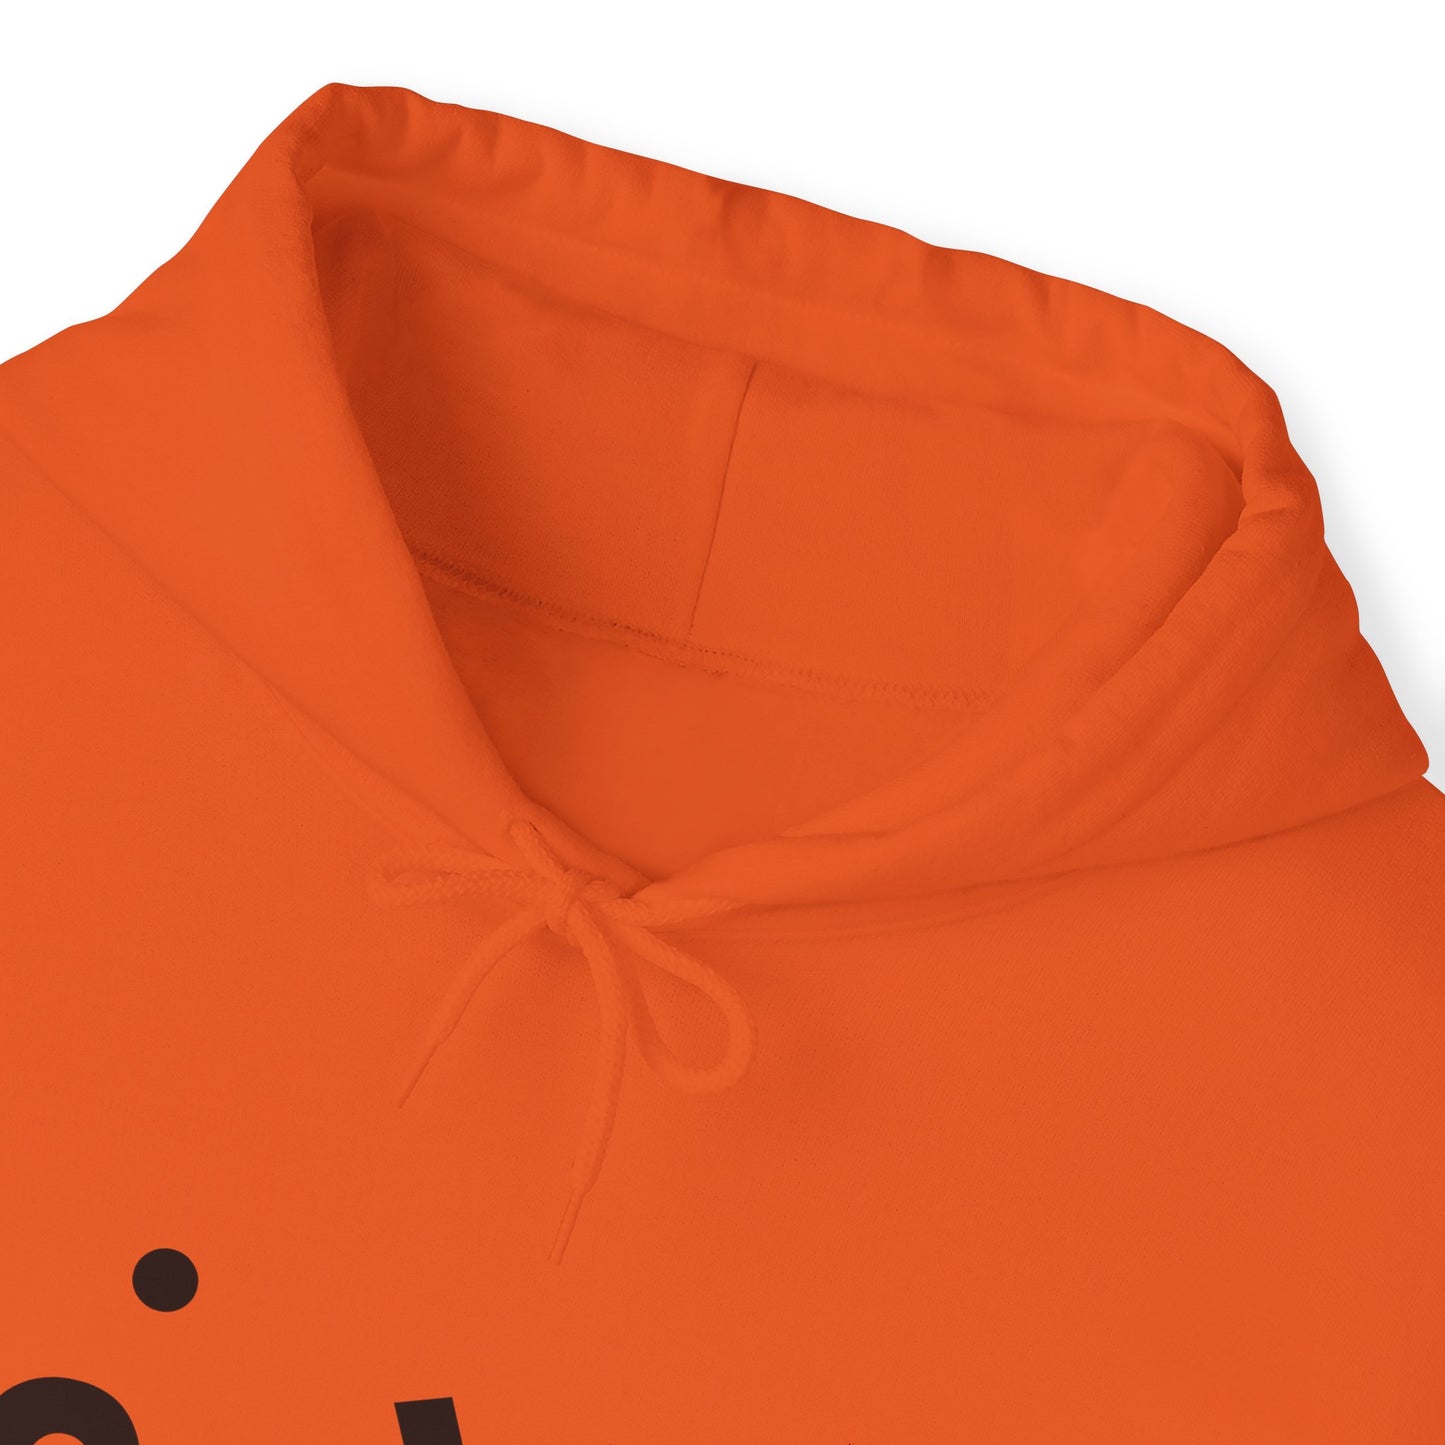 ᓈᐯᐤ - nâpêw - Unisex Heavy Blend™ Hooded Sweatshirt